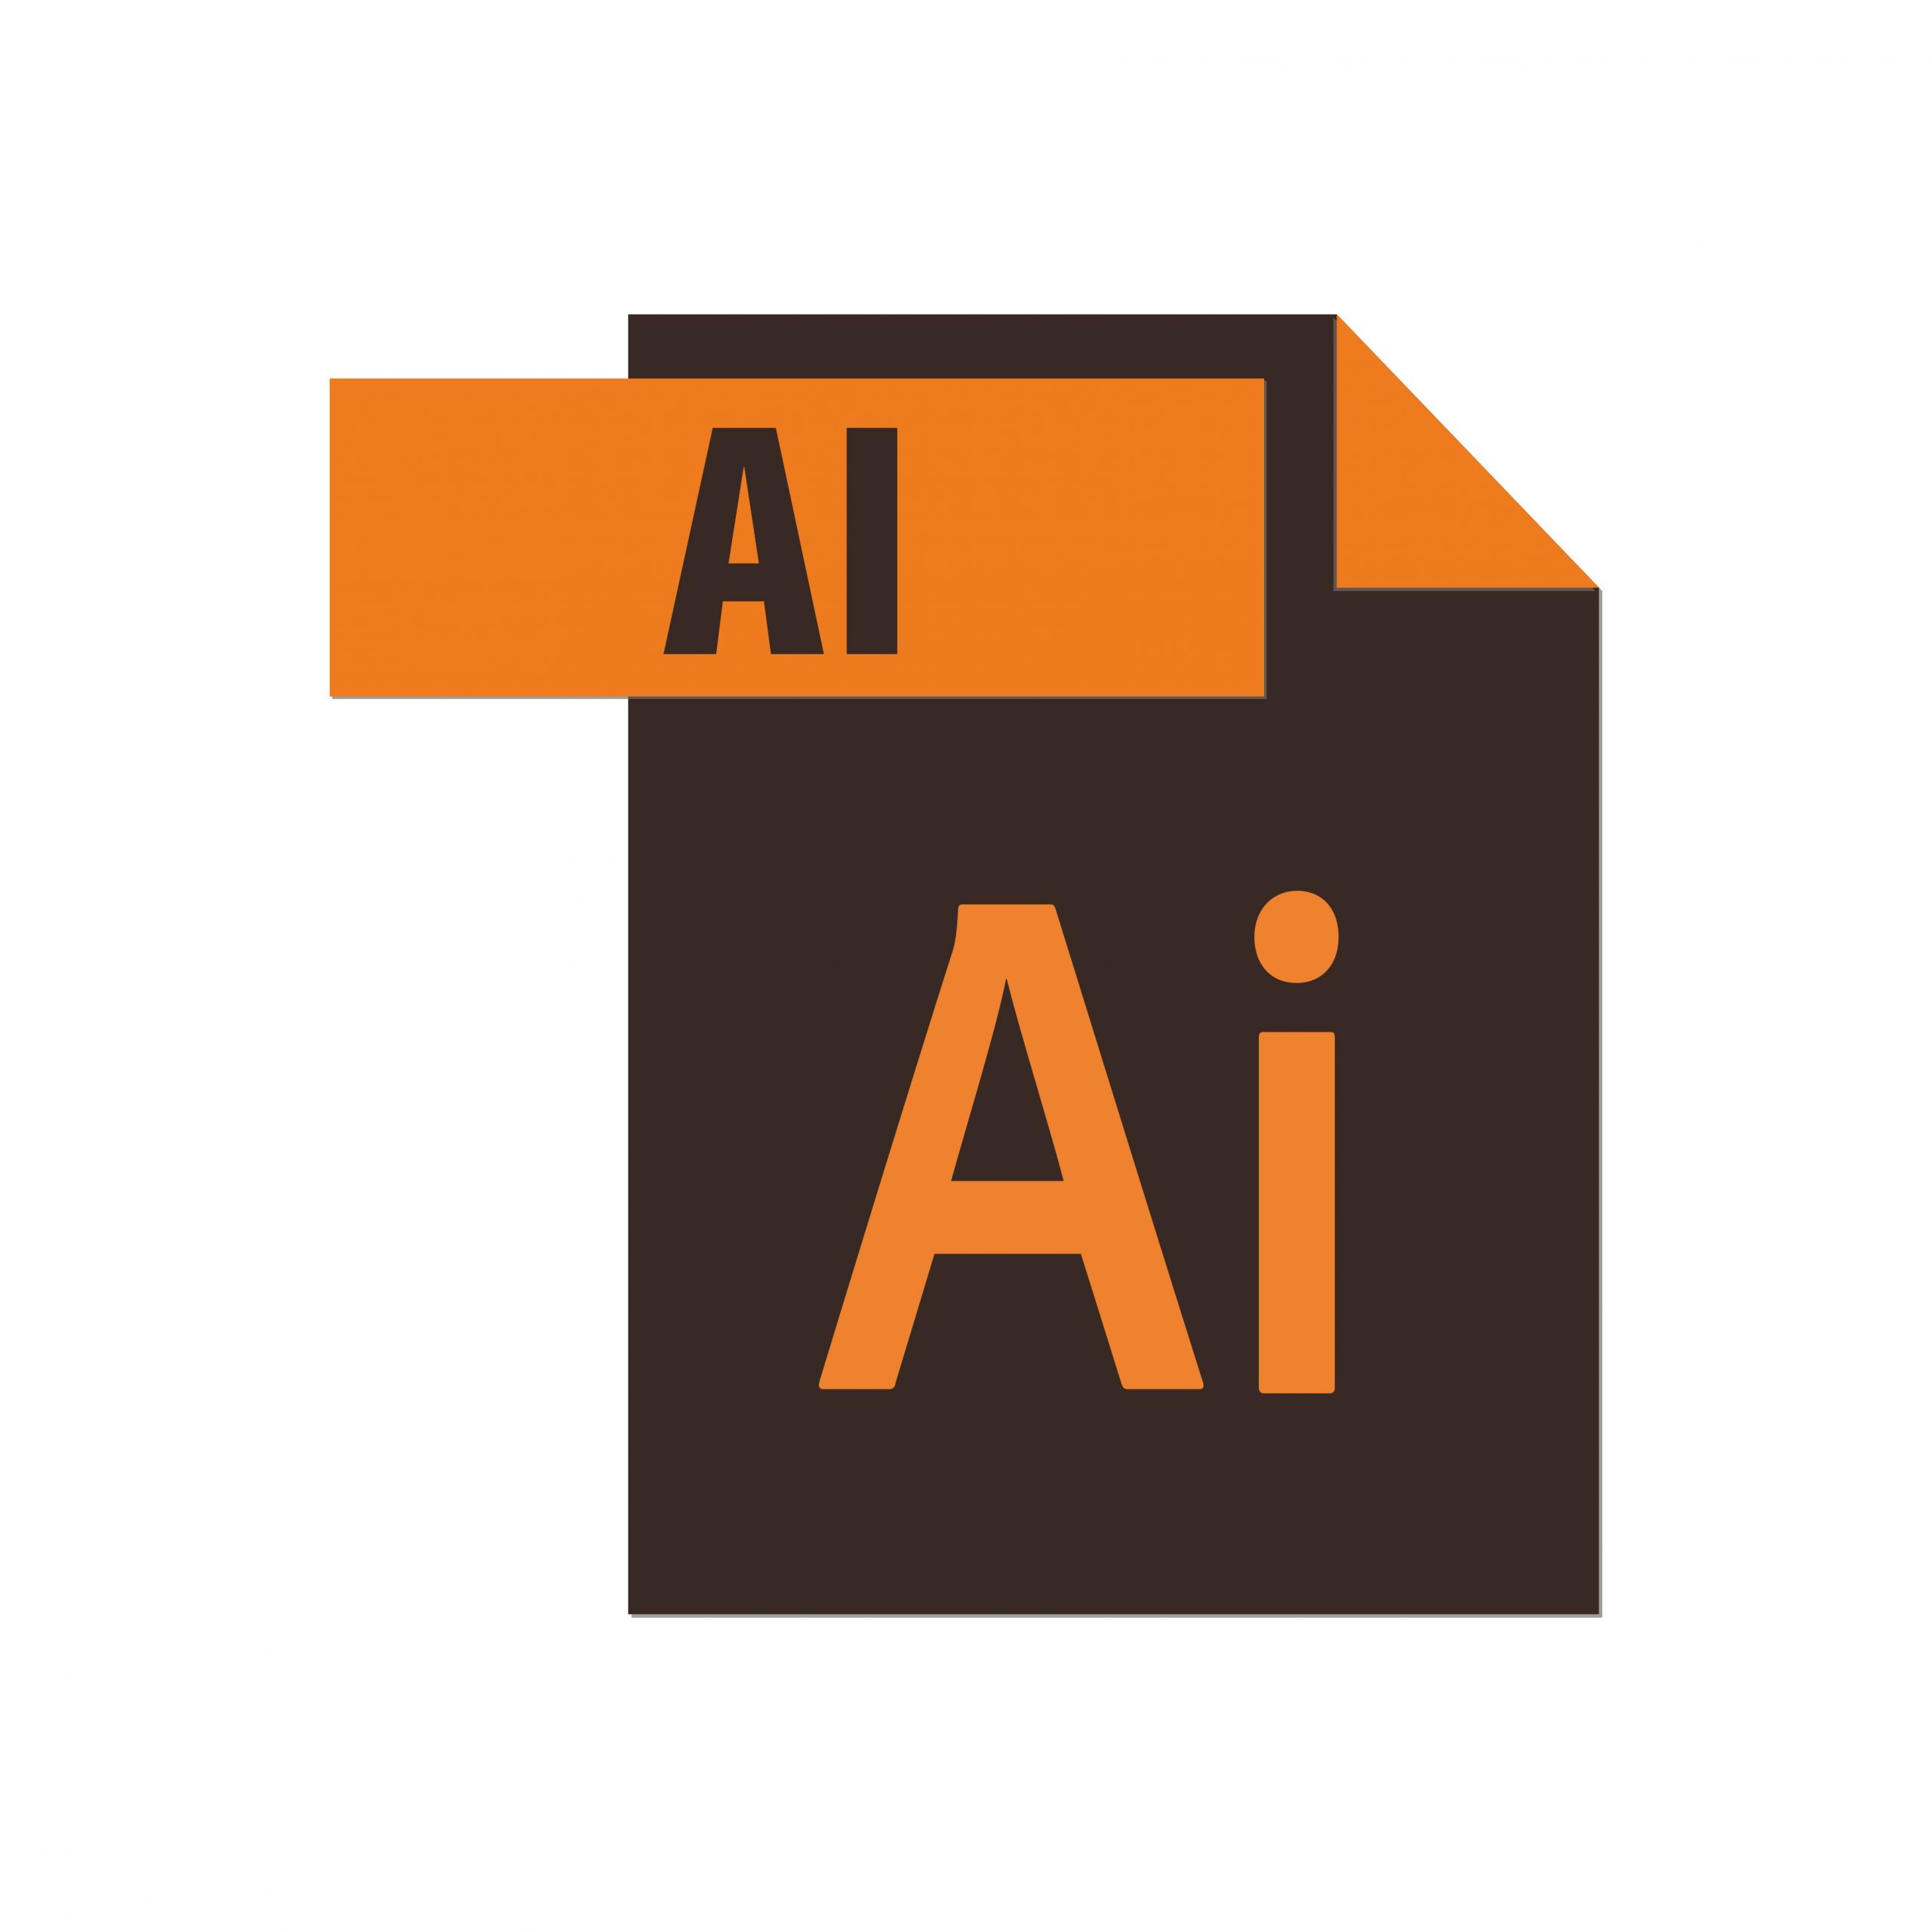 adobe illustrator logo download